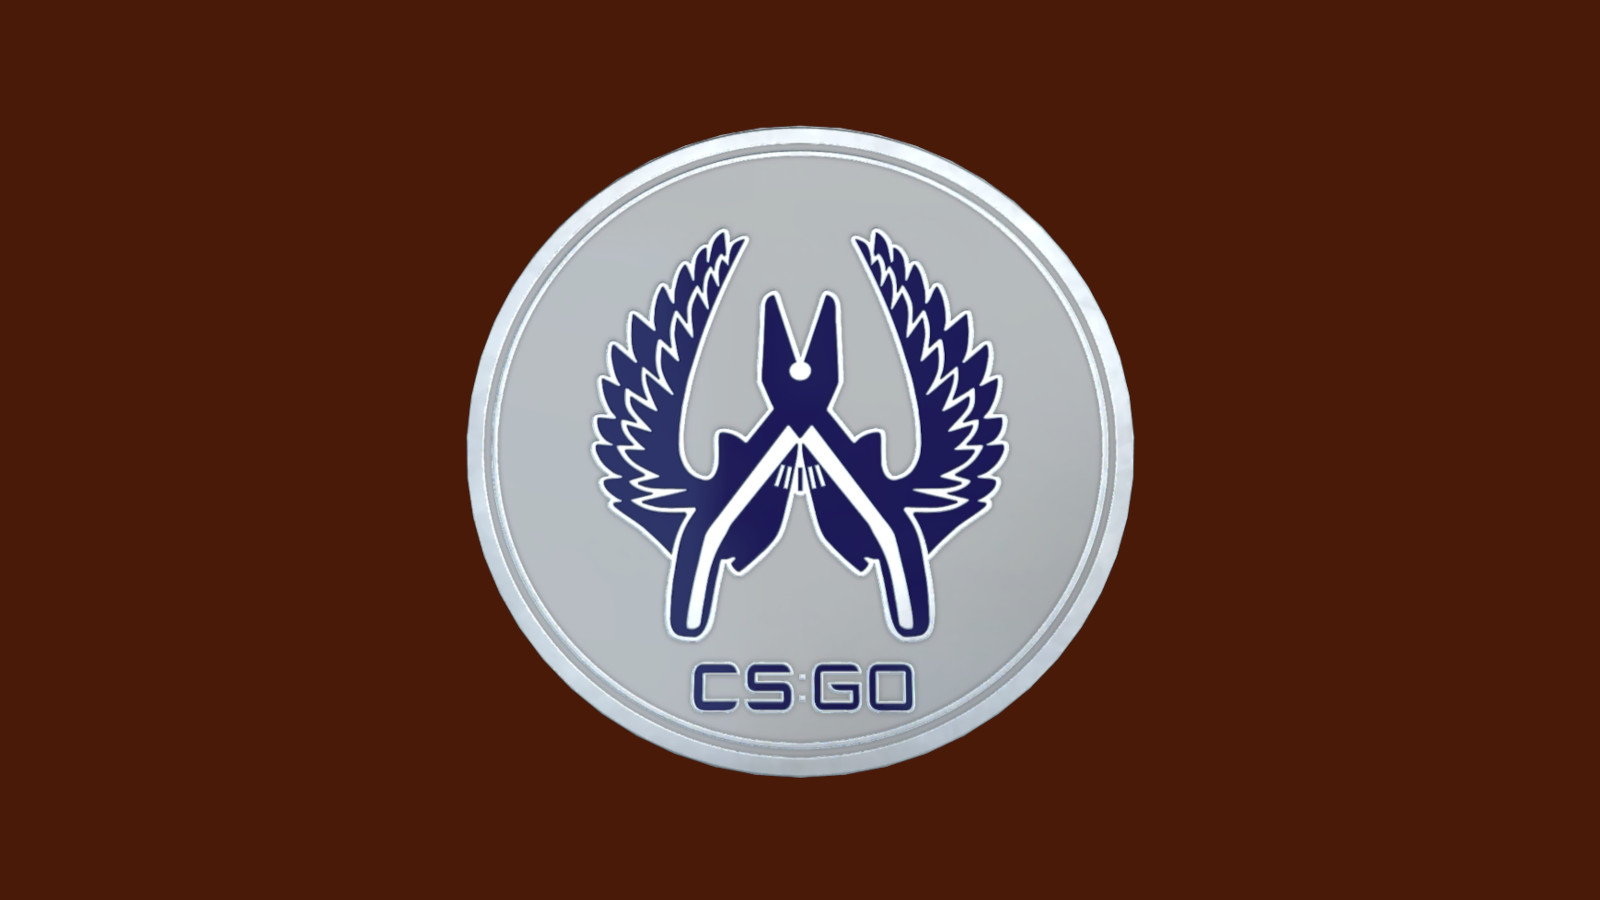 CS:GO - Series 3 - Guardian 3 Collectible Pin $225.98